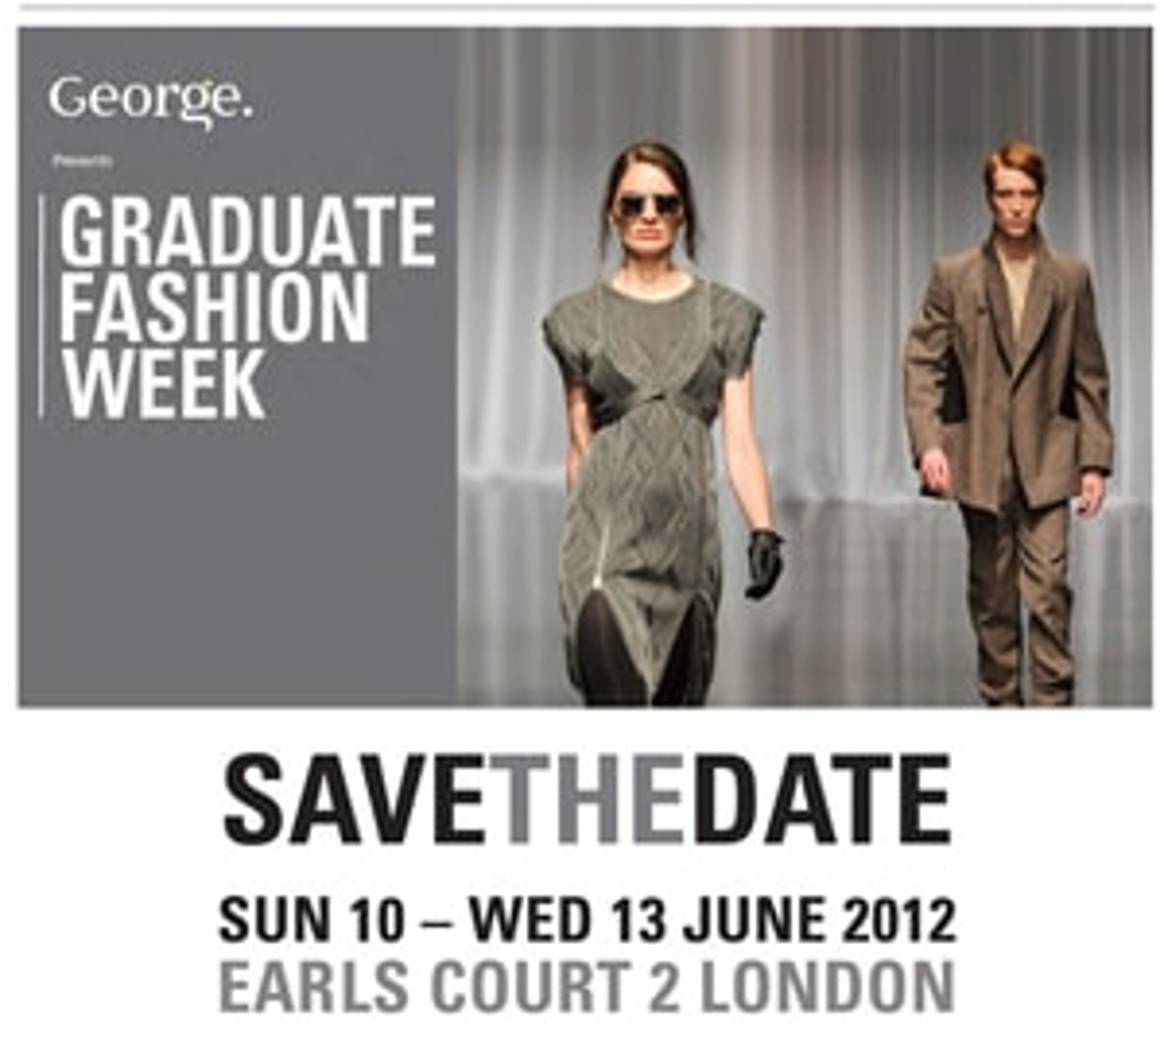 Run down to Graduate Fashion Week